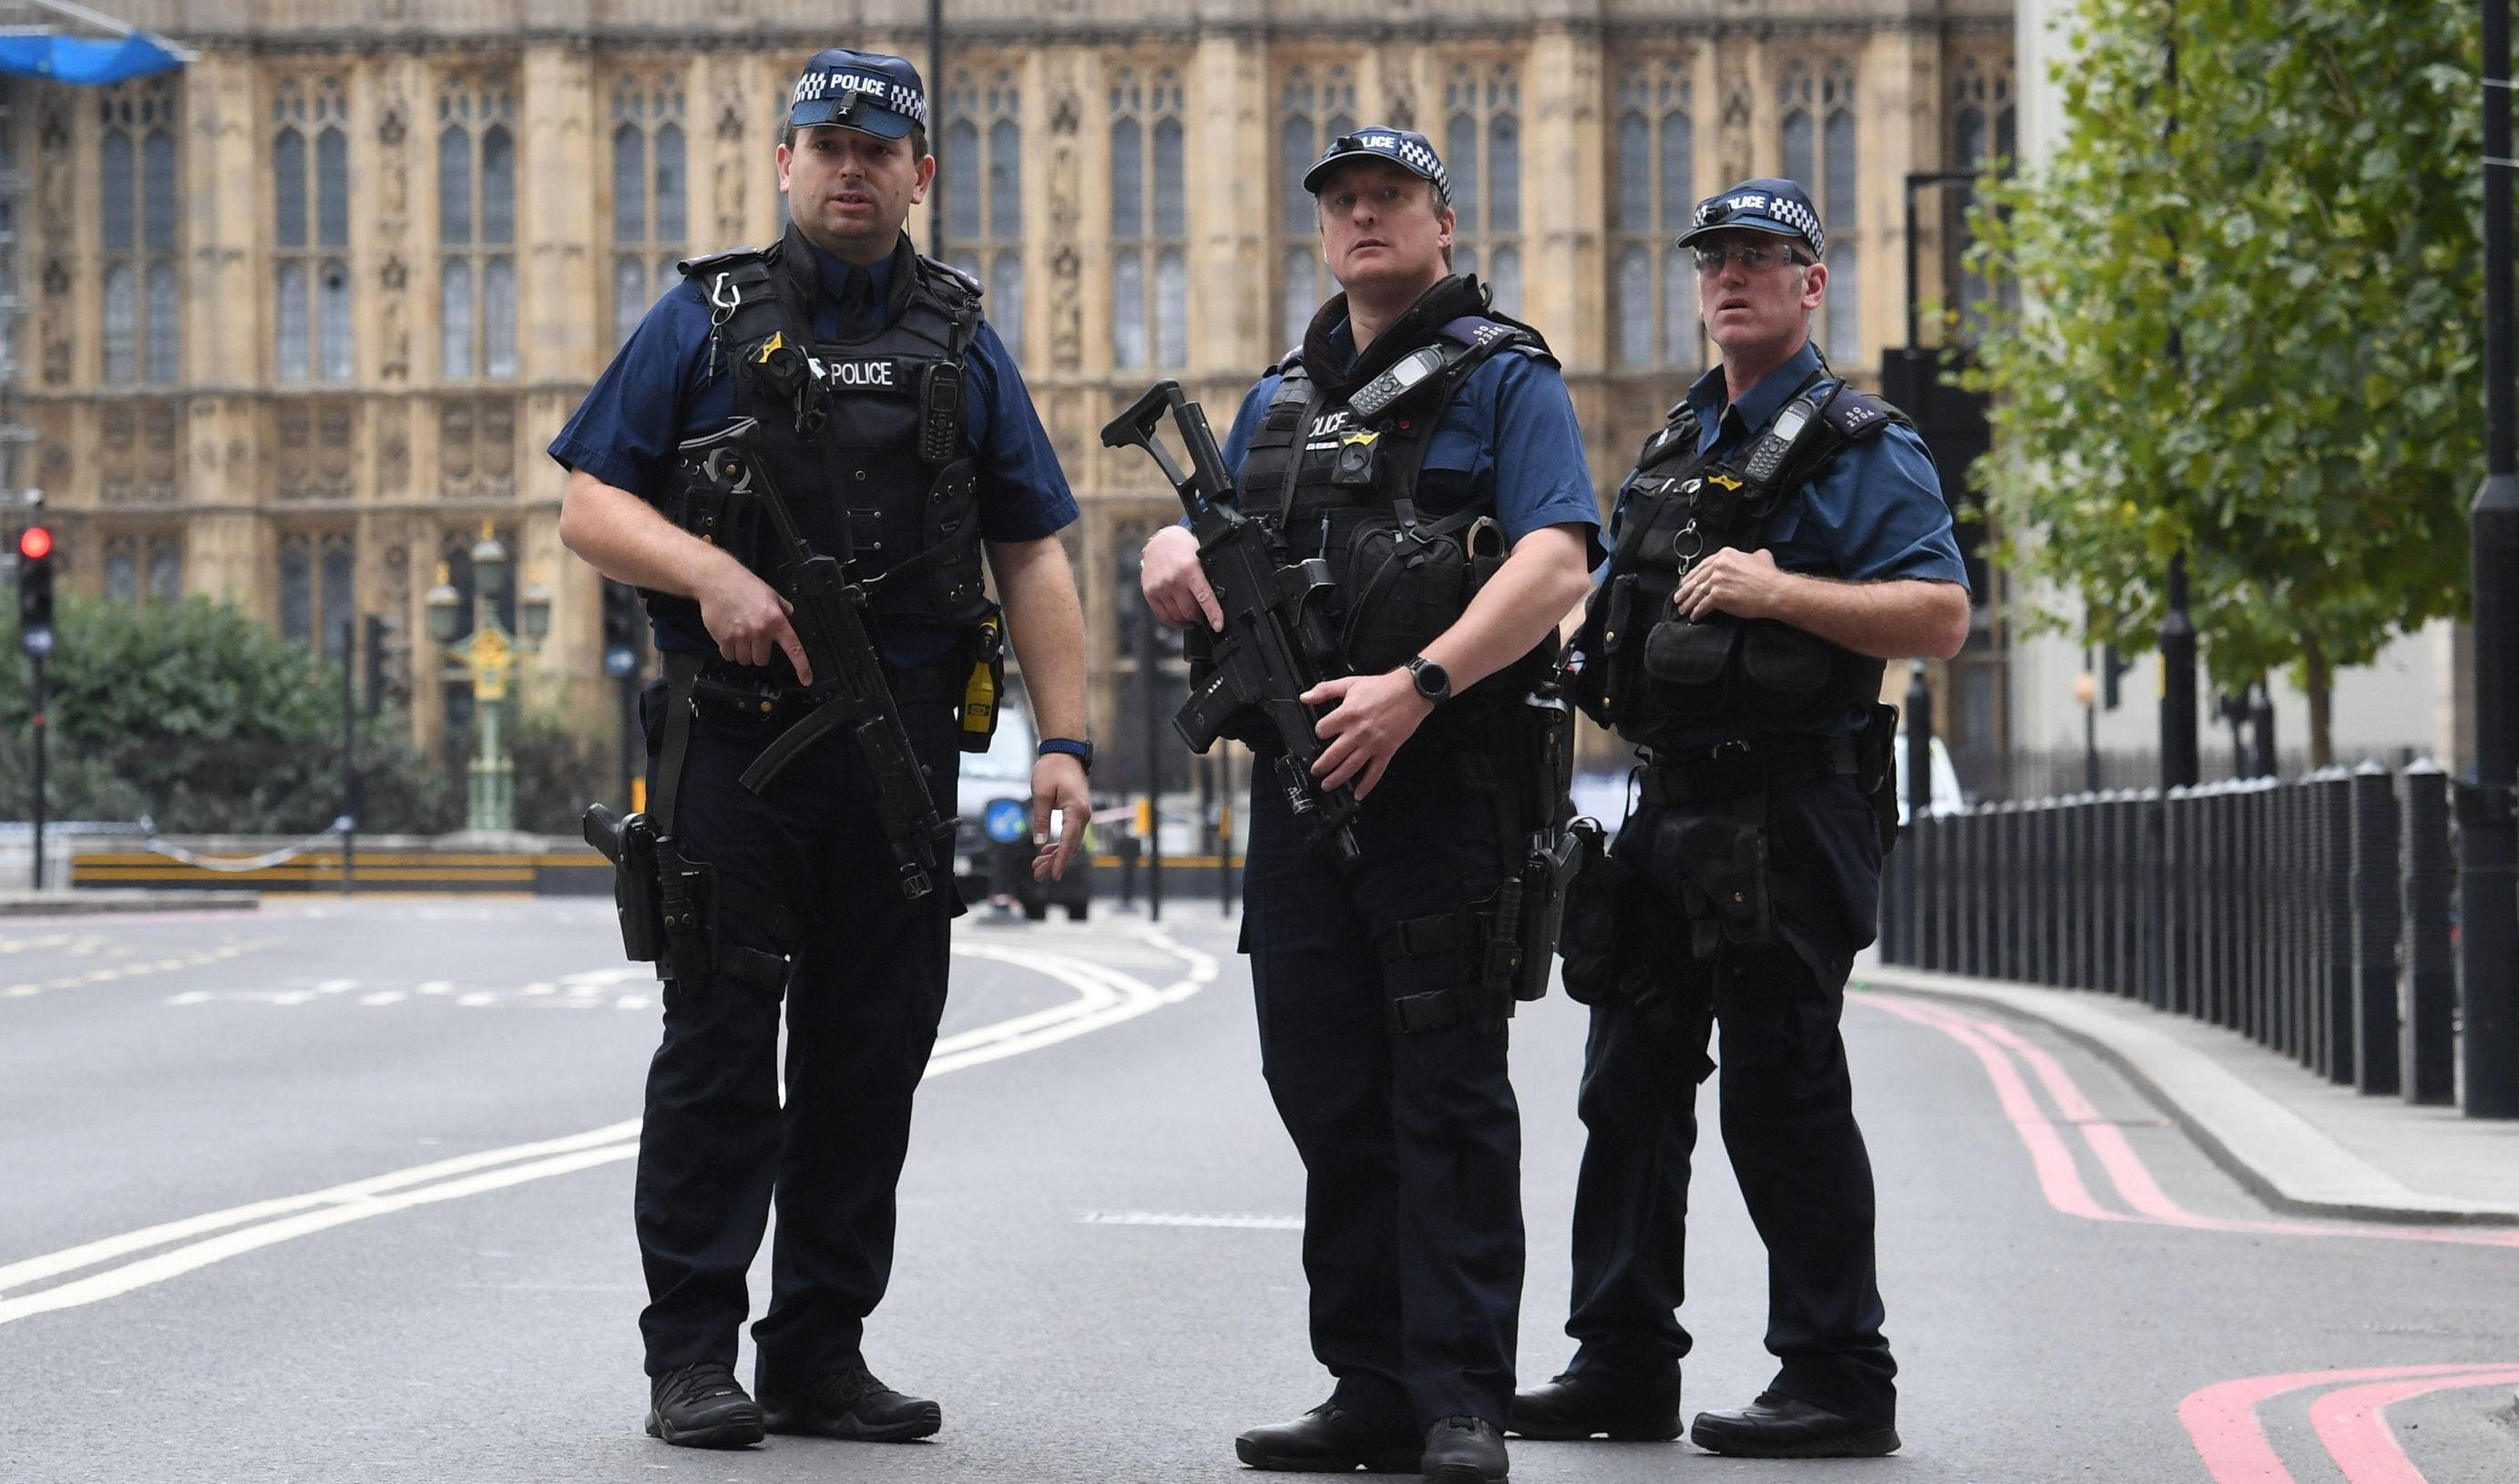 KRAJ DRAME U LONDONU! Policija potvrdila da "sumnjivi predmet" ne predstavlja opasnost!